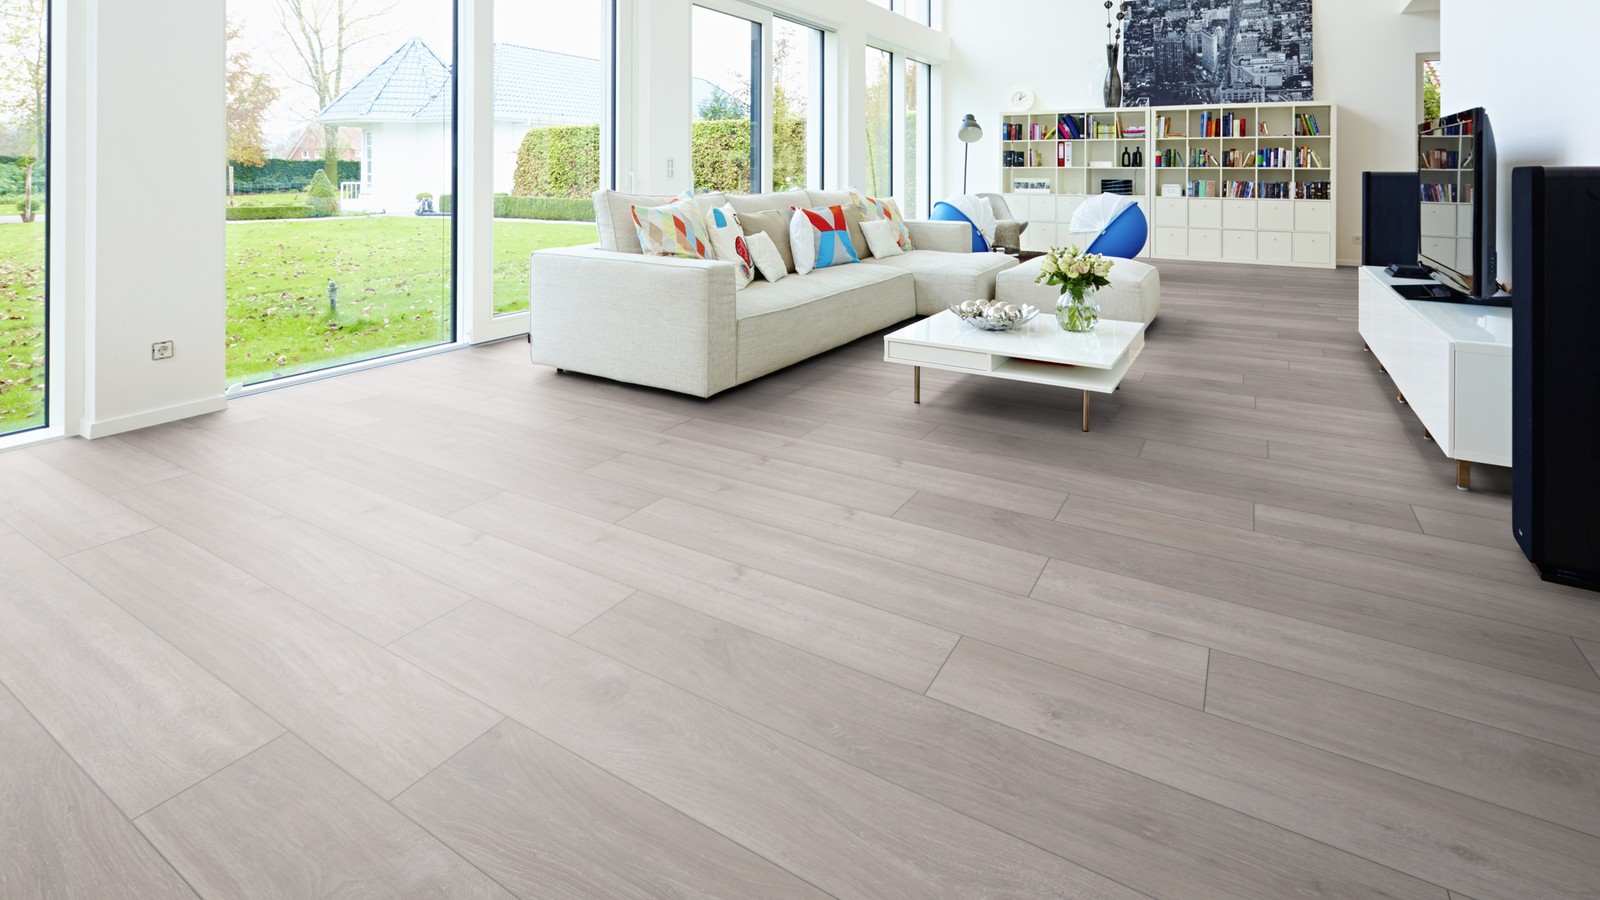 Quality Of Laminate Flooring, Is Laminate Flooring Good For Living Room